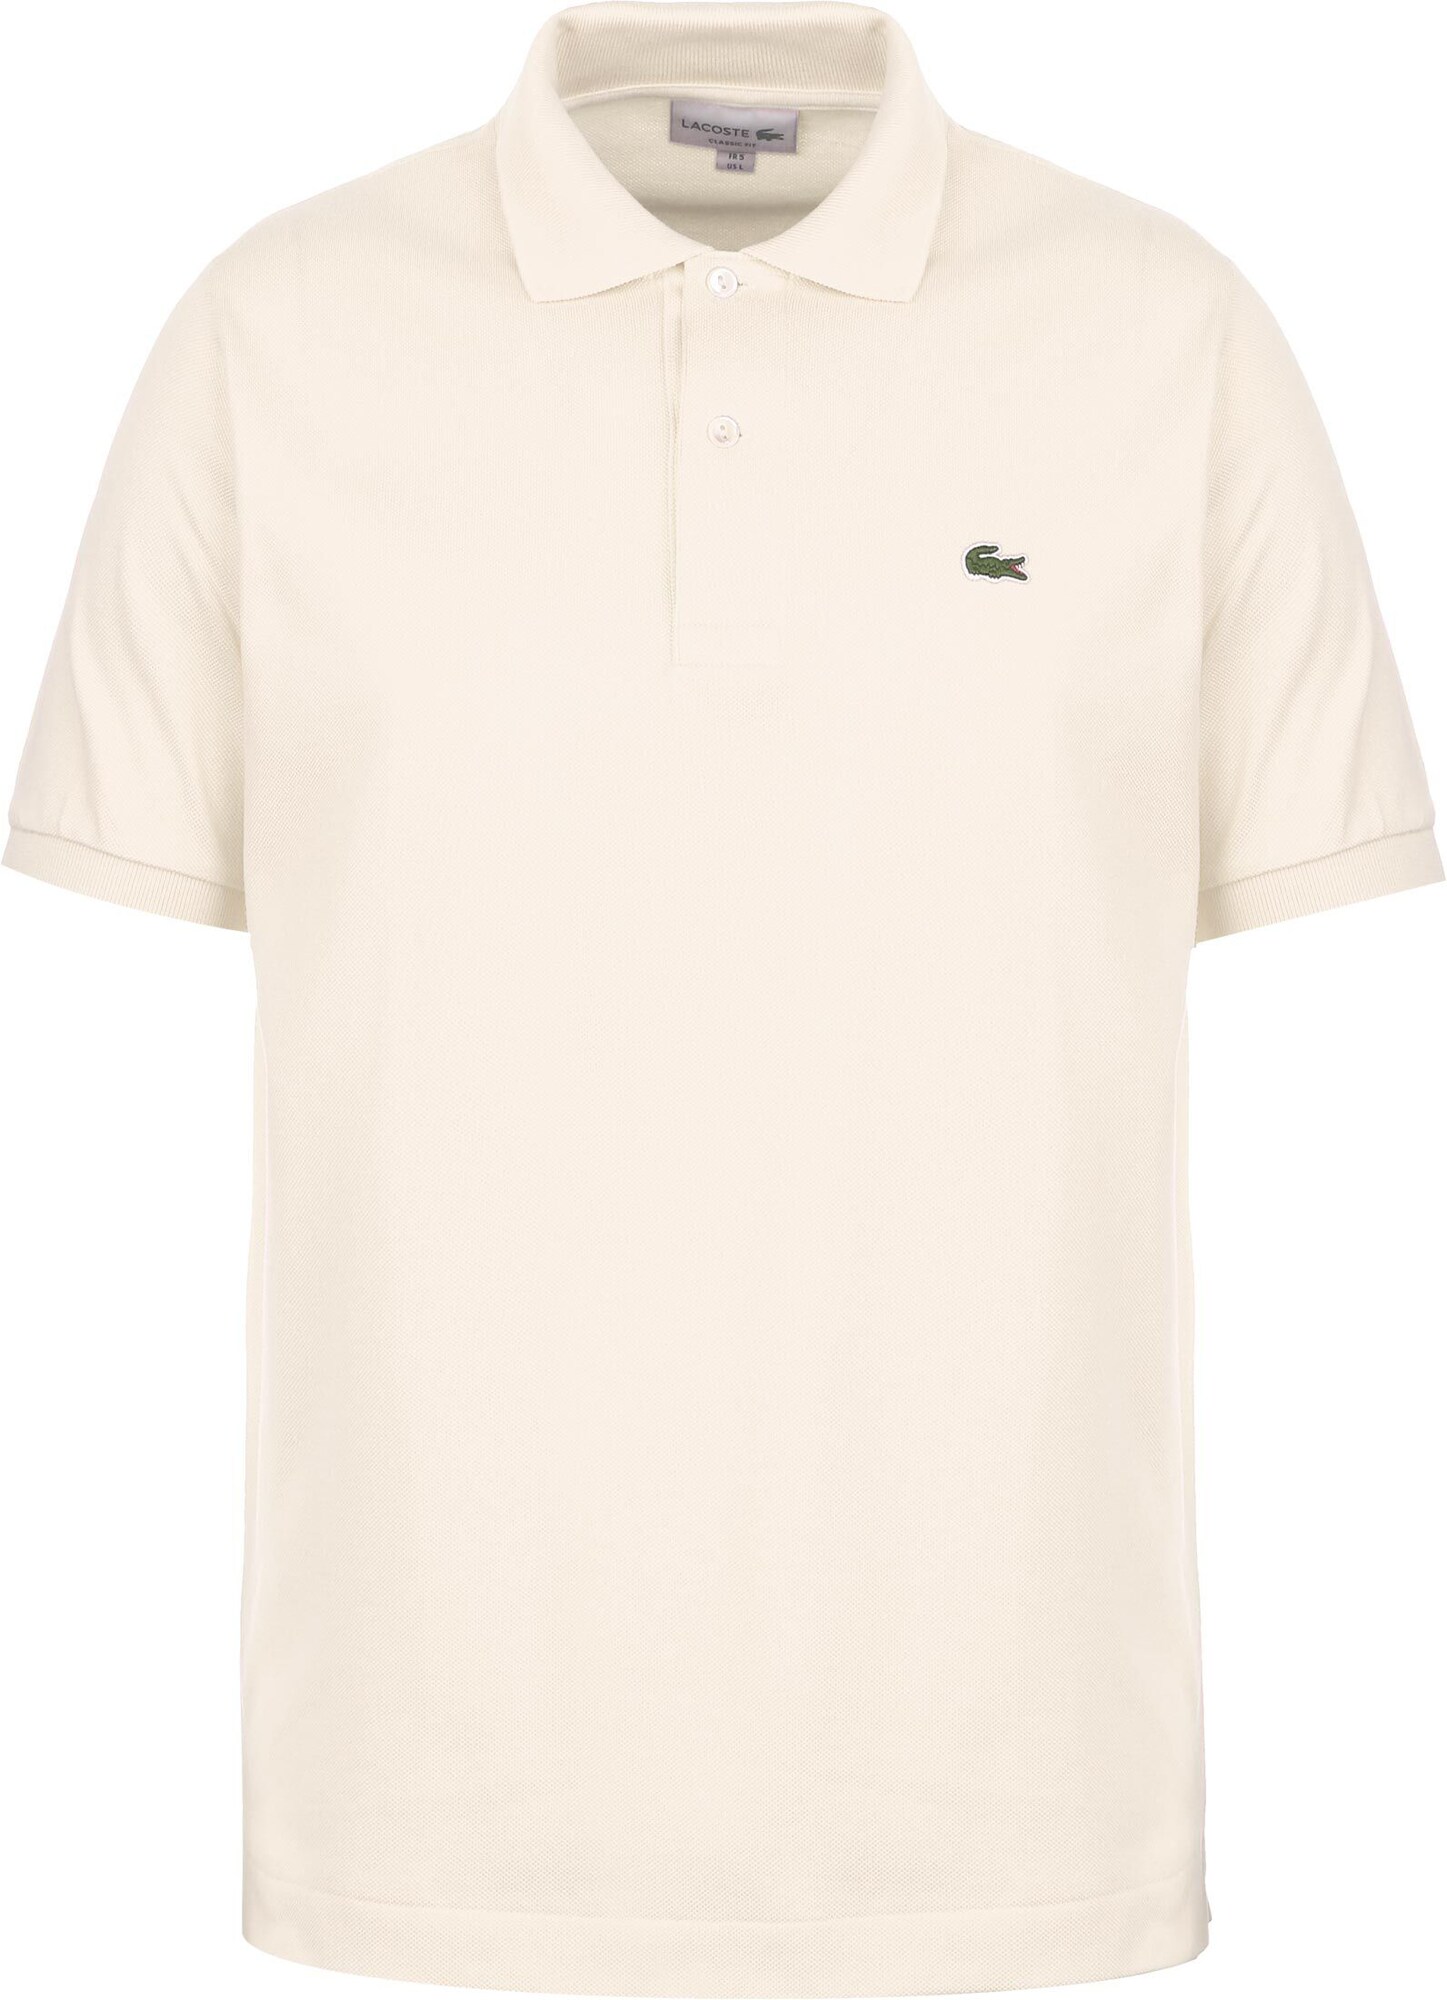 Lacoste LACOSTE Poloshirt creme / grün / weiß